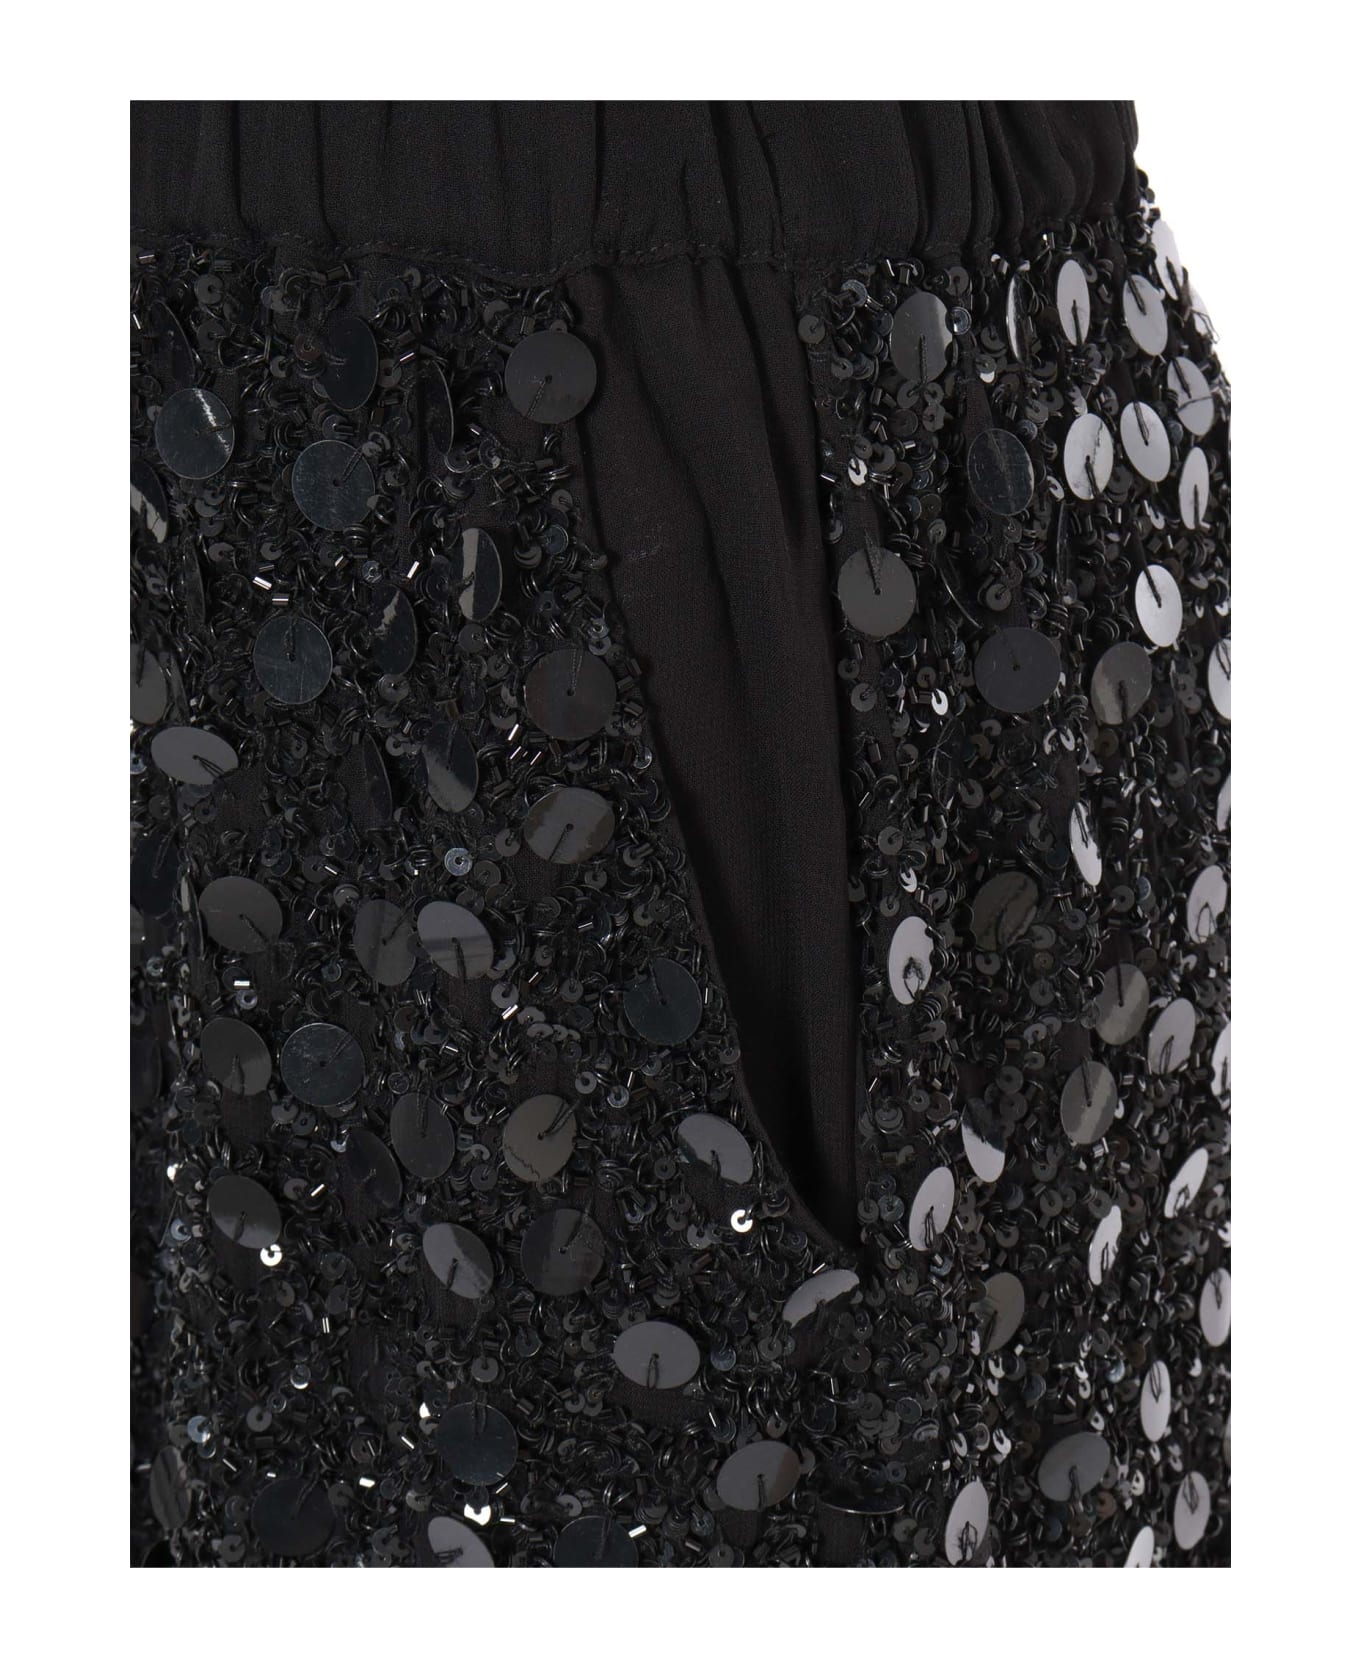 Parosh Black Shorts With Sequins - BLACK